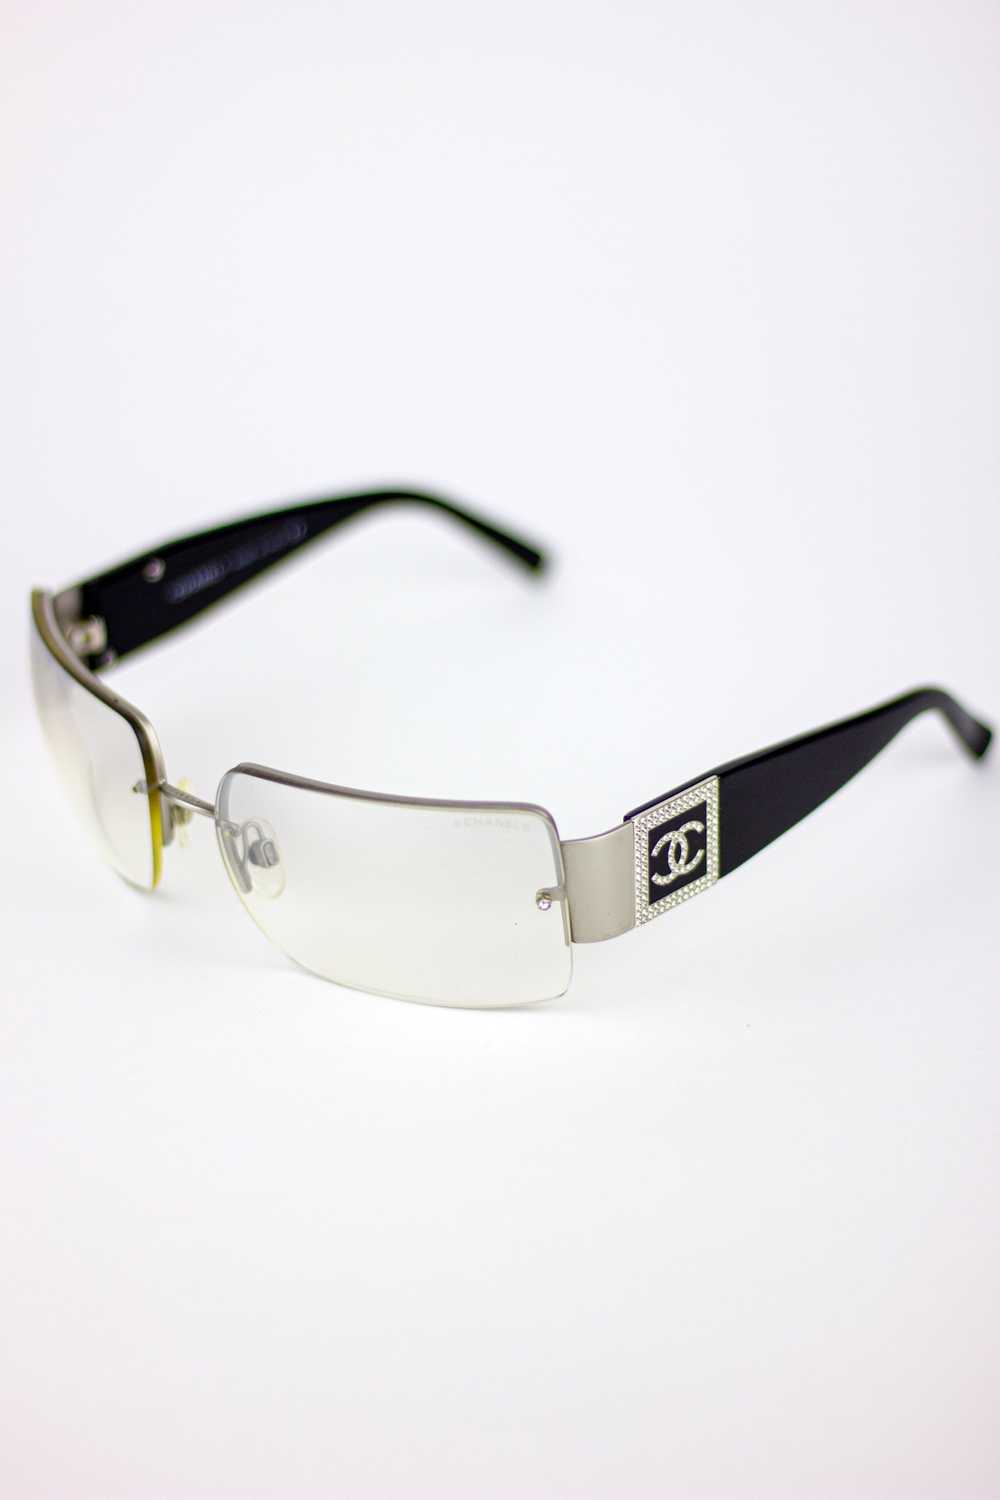 Chanel Chanel CC Logo Rhinestone Clear Sunglasses - image 2